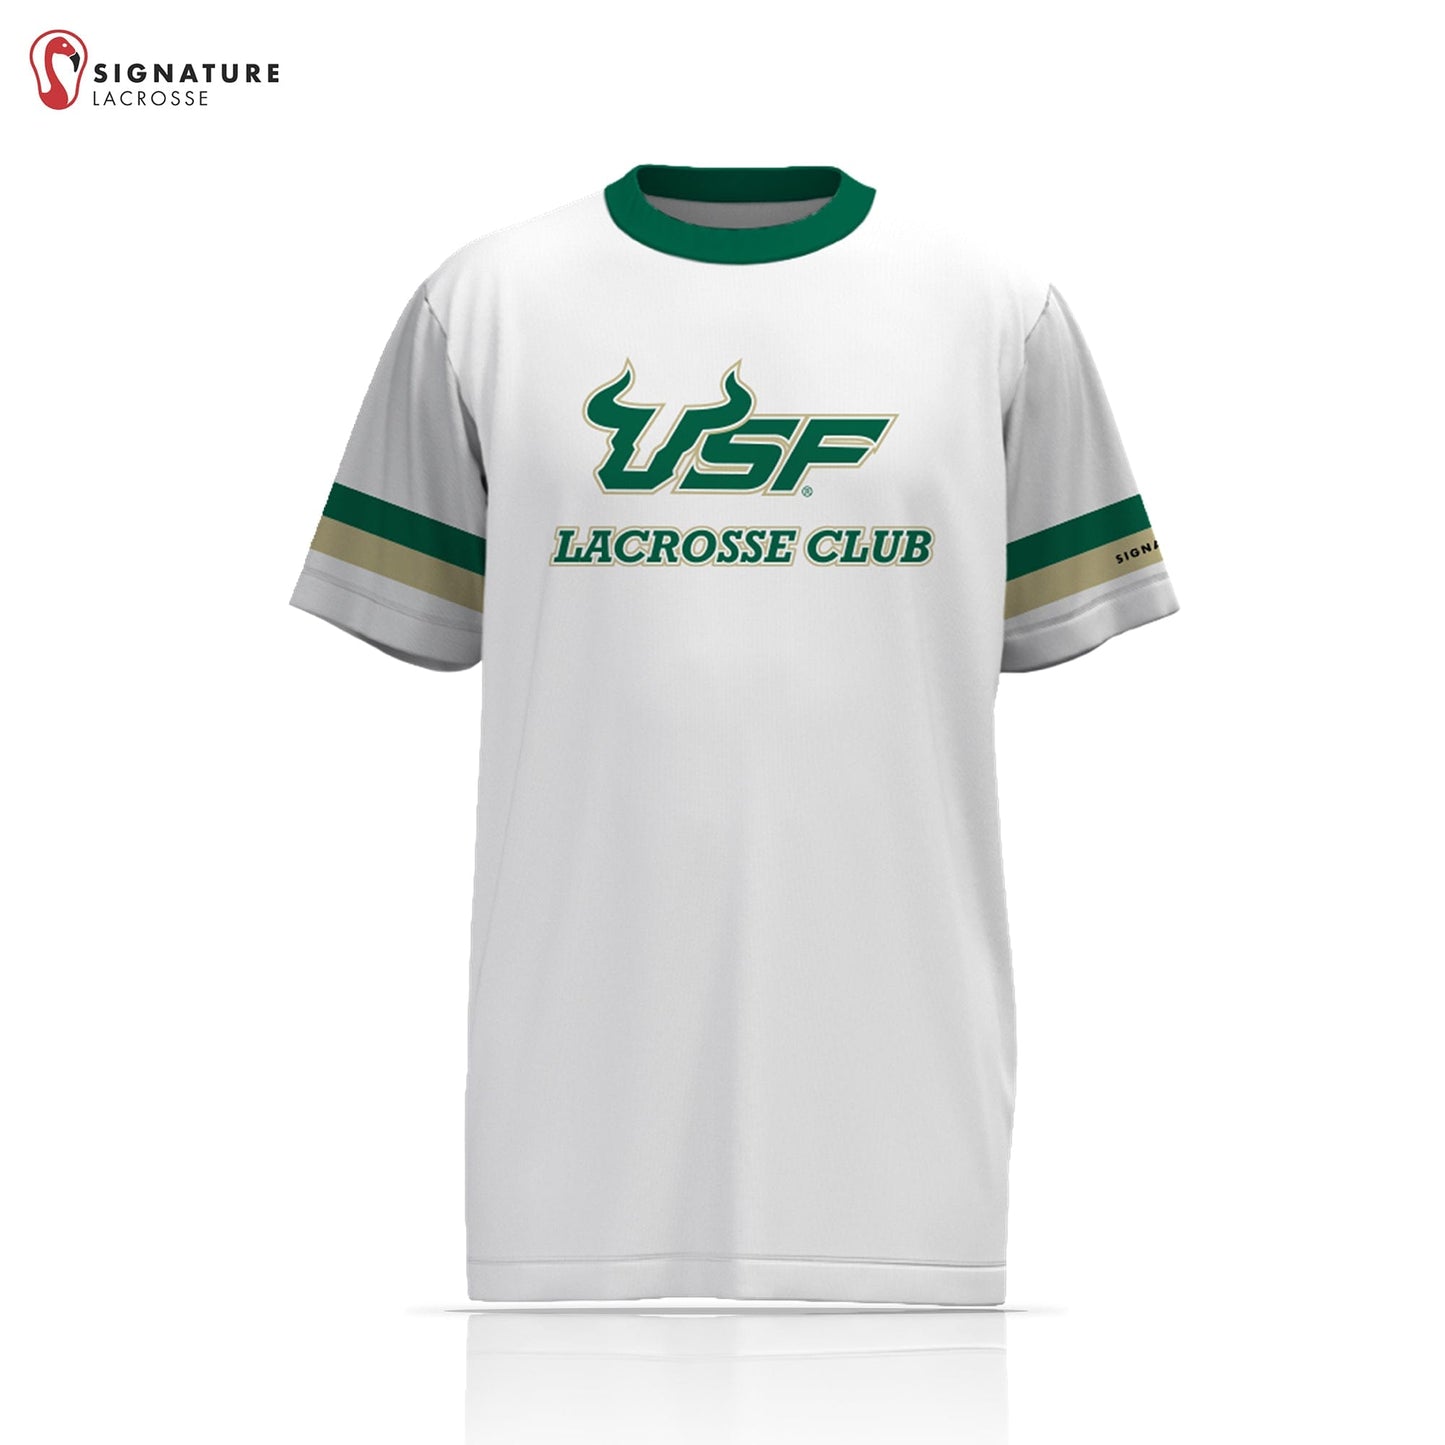 USF Lacrosse Men's White Short Sleeve Shooting Shirt: N/A Signature Lacrosse